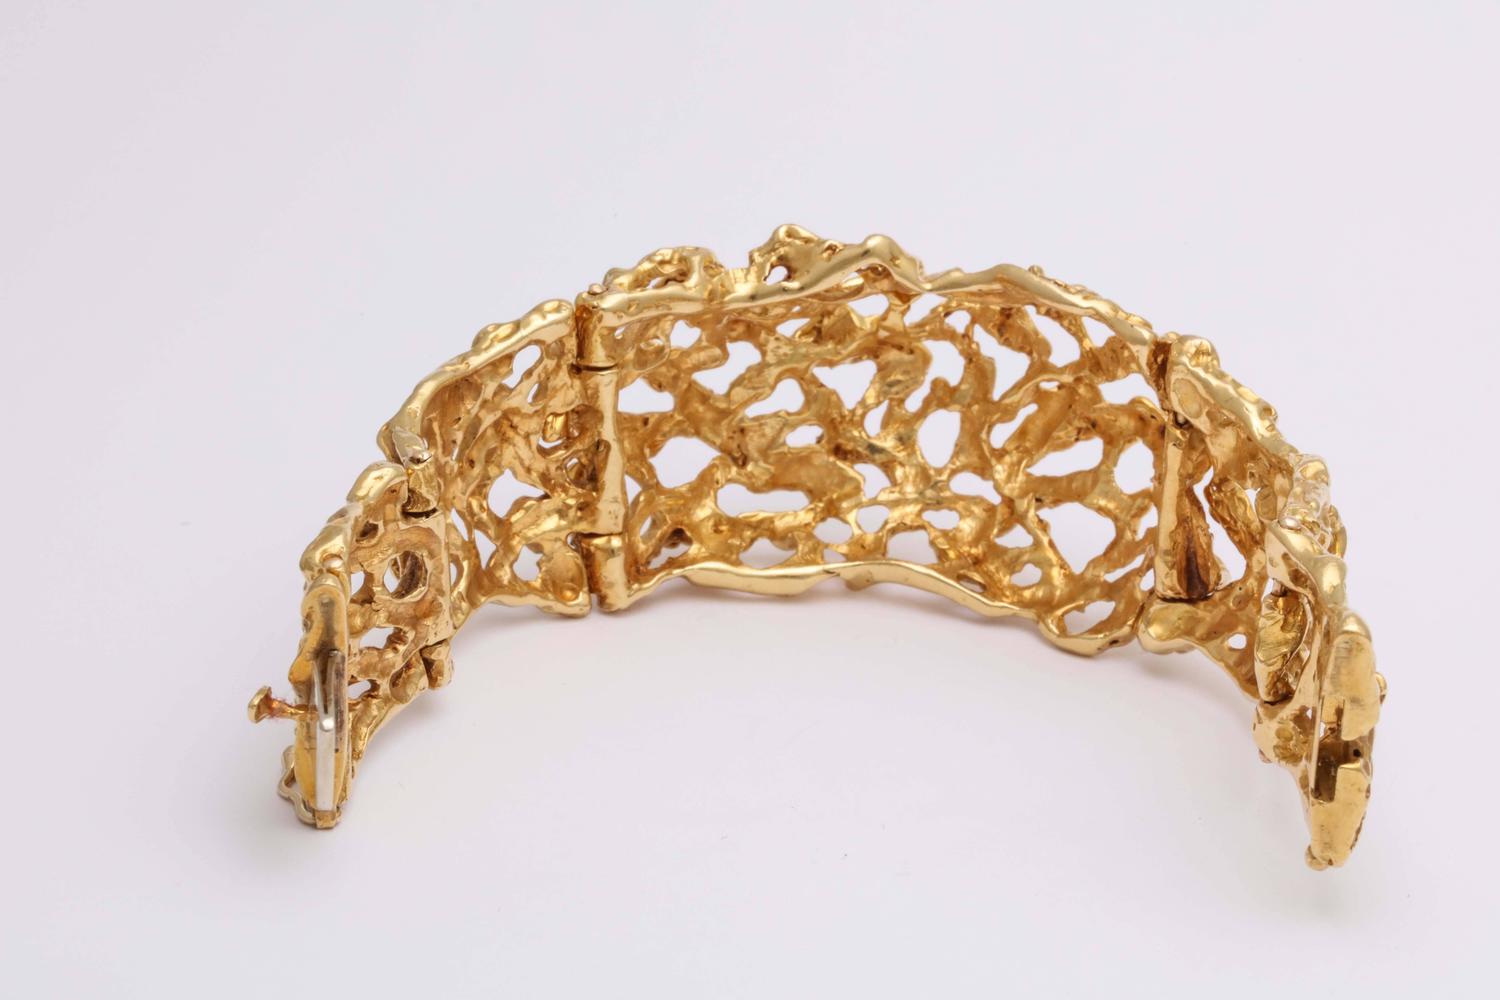 Arthur King Modernist Gold Openwork Bracelet at 1stdibs